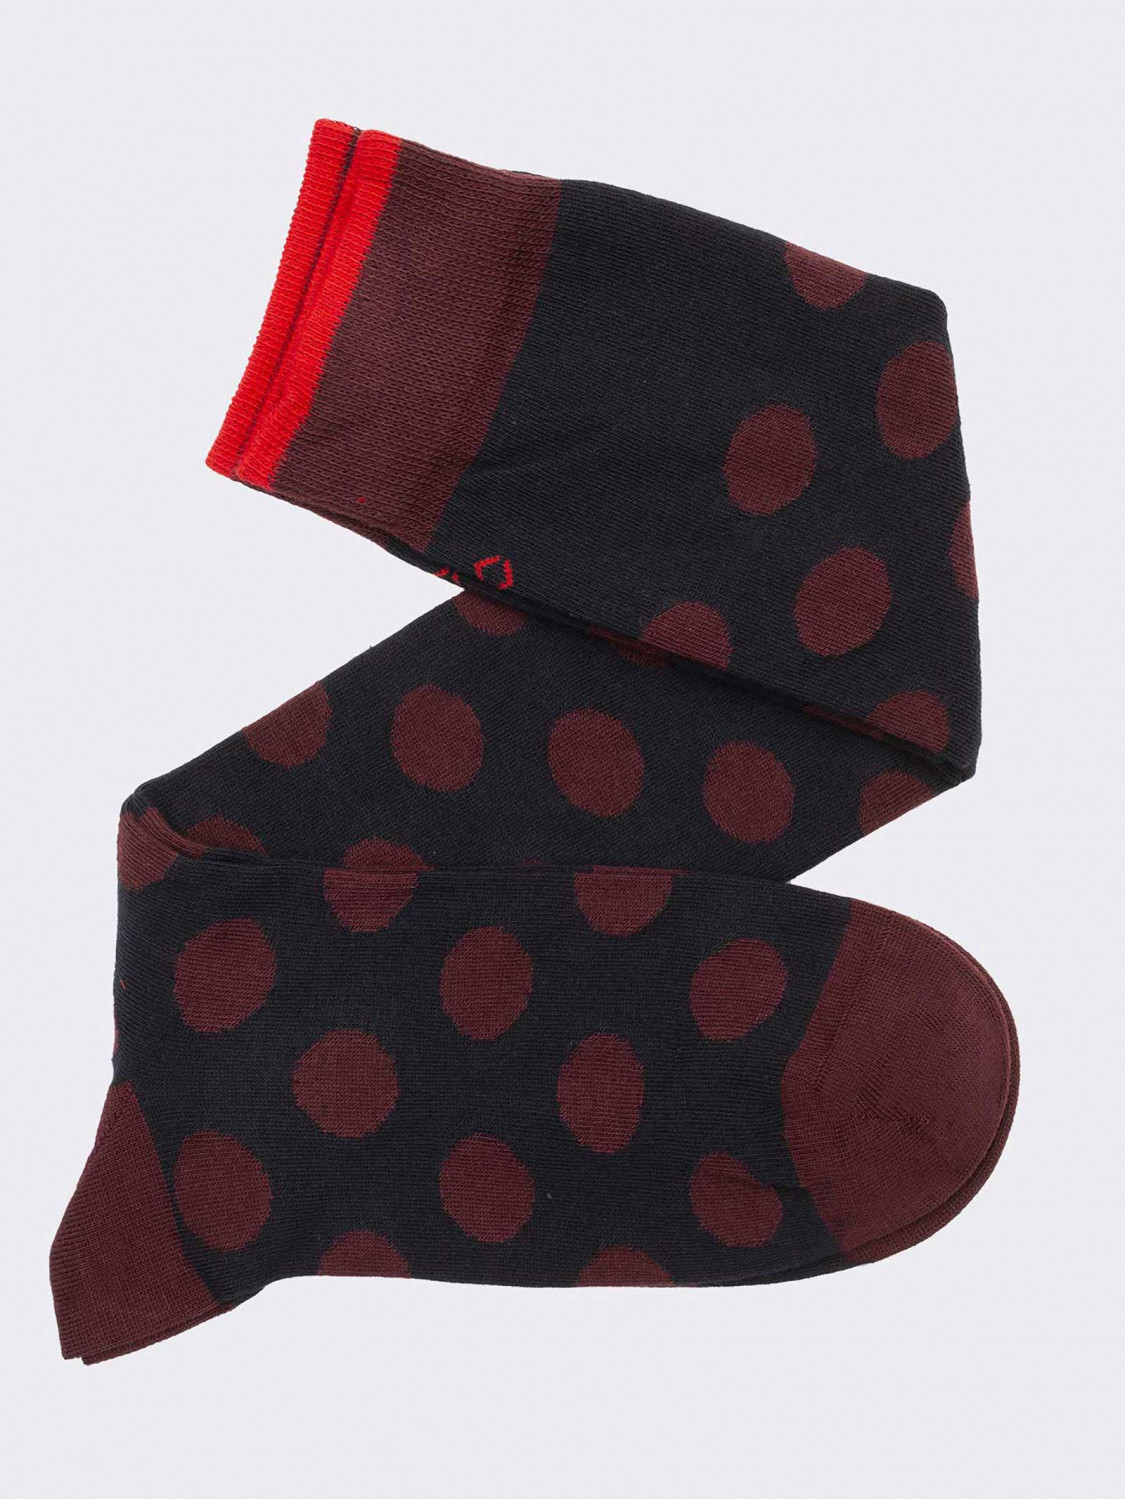 Long sock, maxi dot pattern - made in Italy